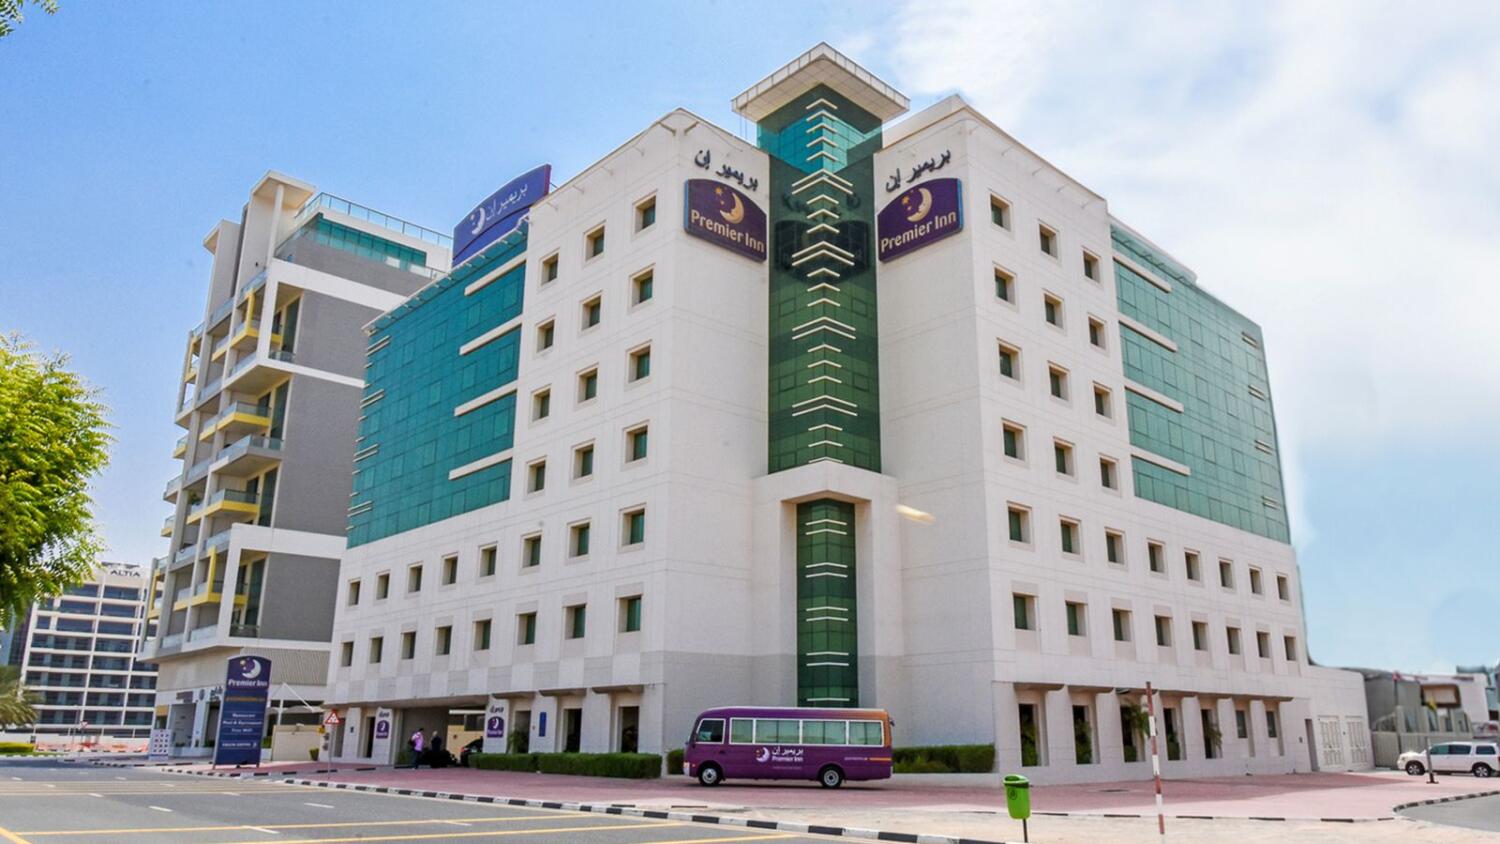 Premier Inn, Dubai Silicon Oasis branch